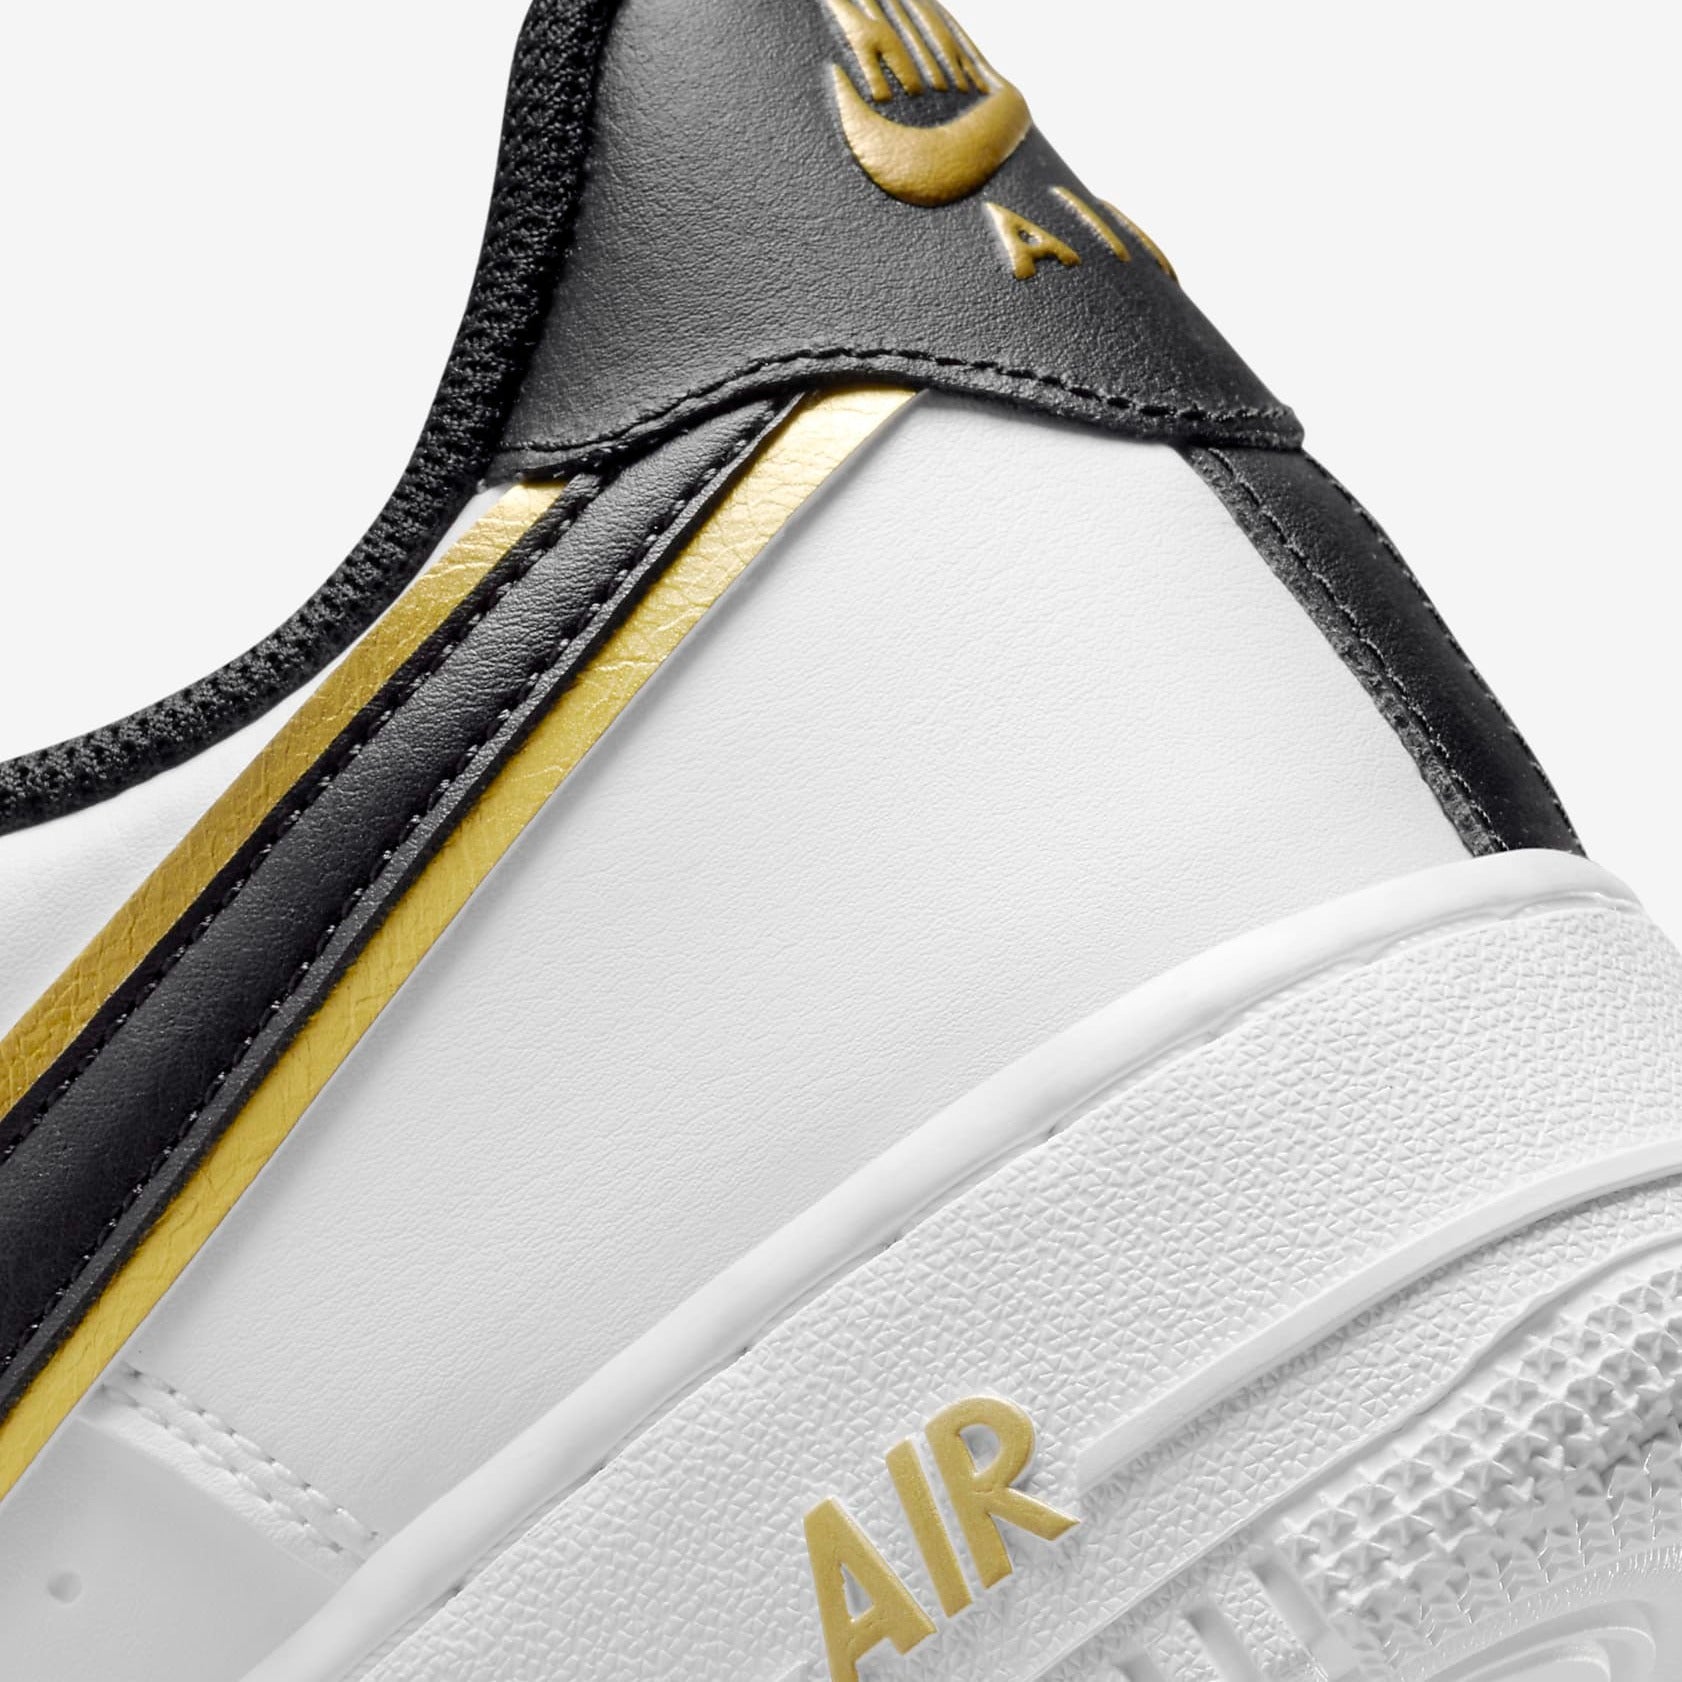 Size+13+-+Nike+Air+Force+1+Black+Metallic+Gold+White+-+da8481001